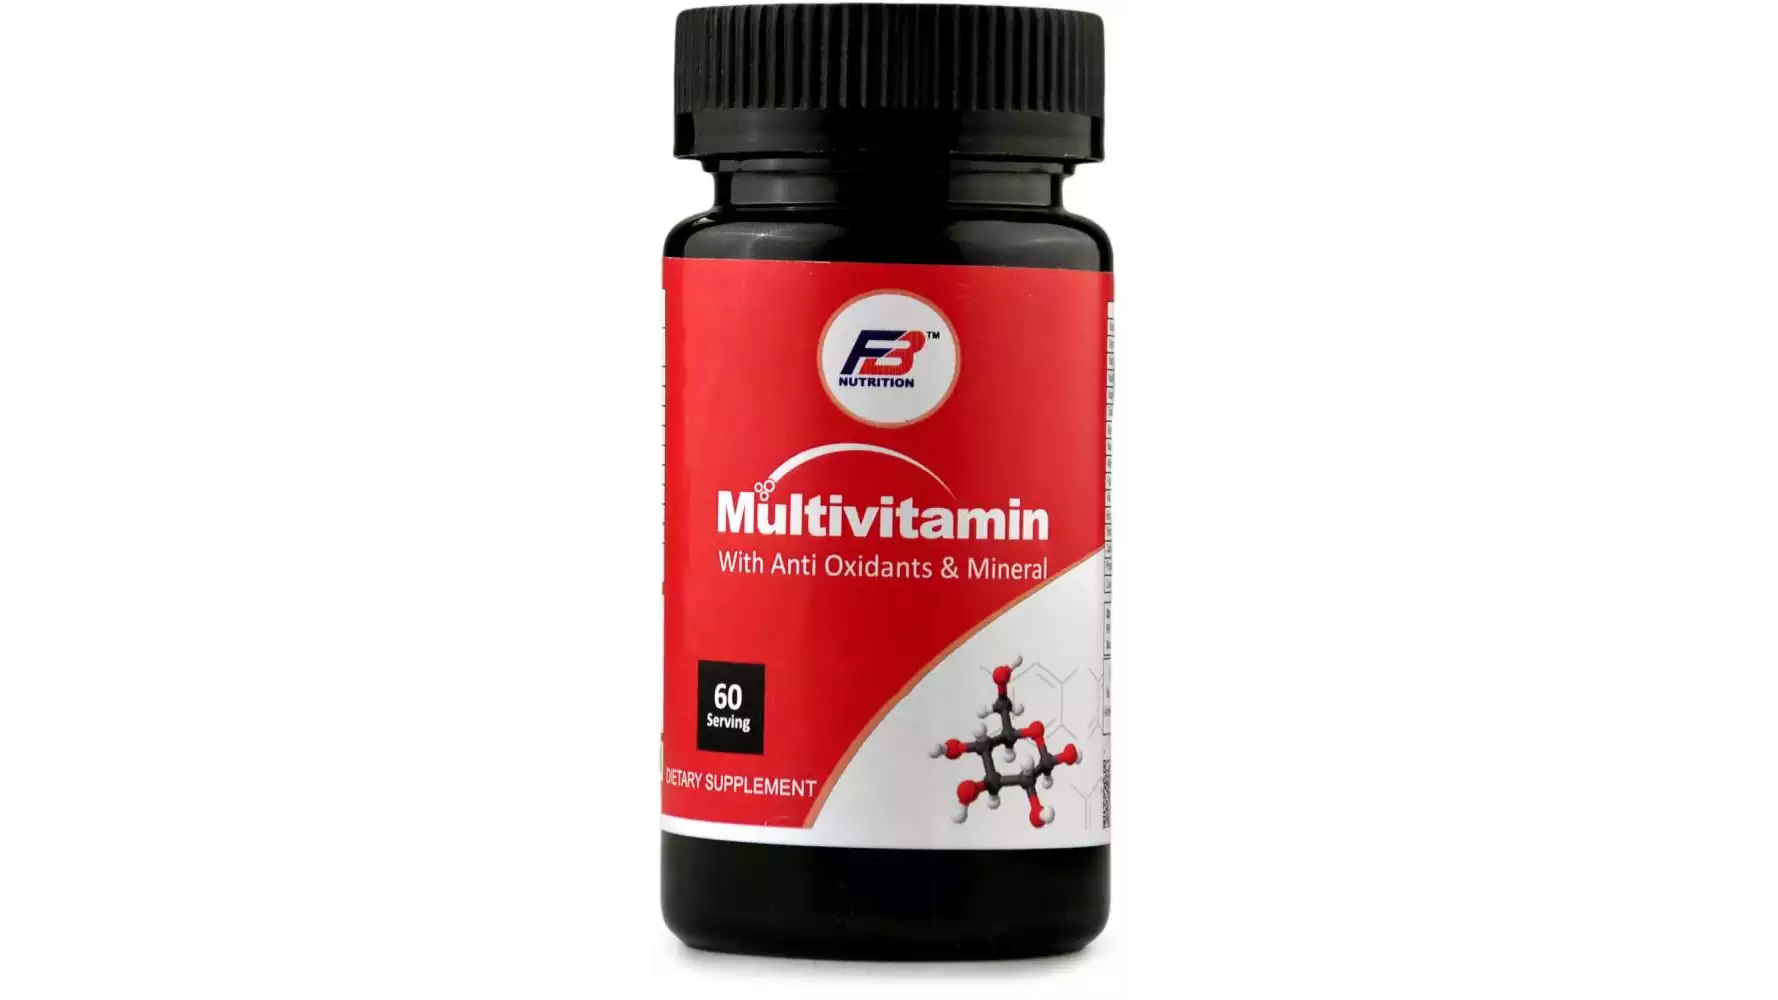 FB Nutrition Multivitamin (60caps)